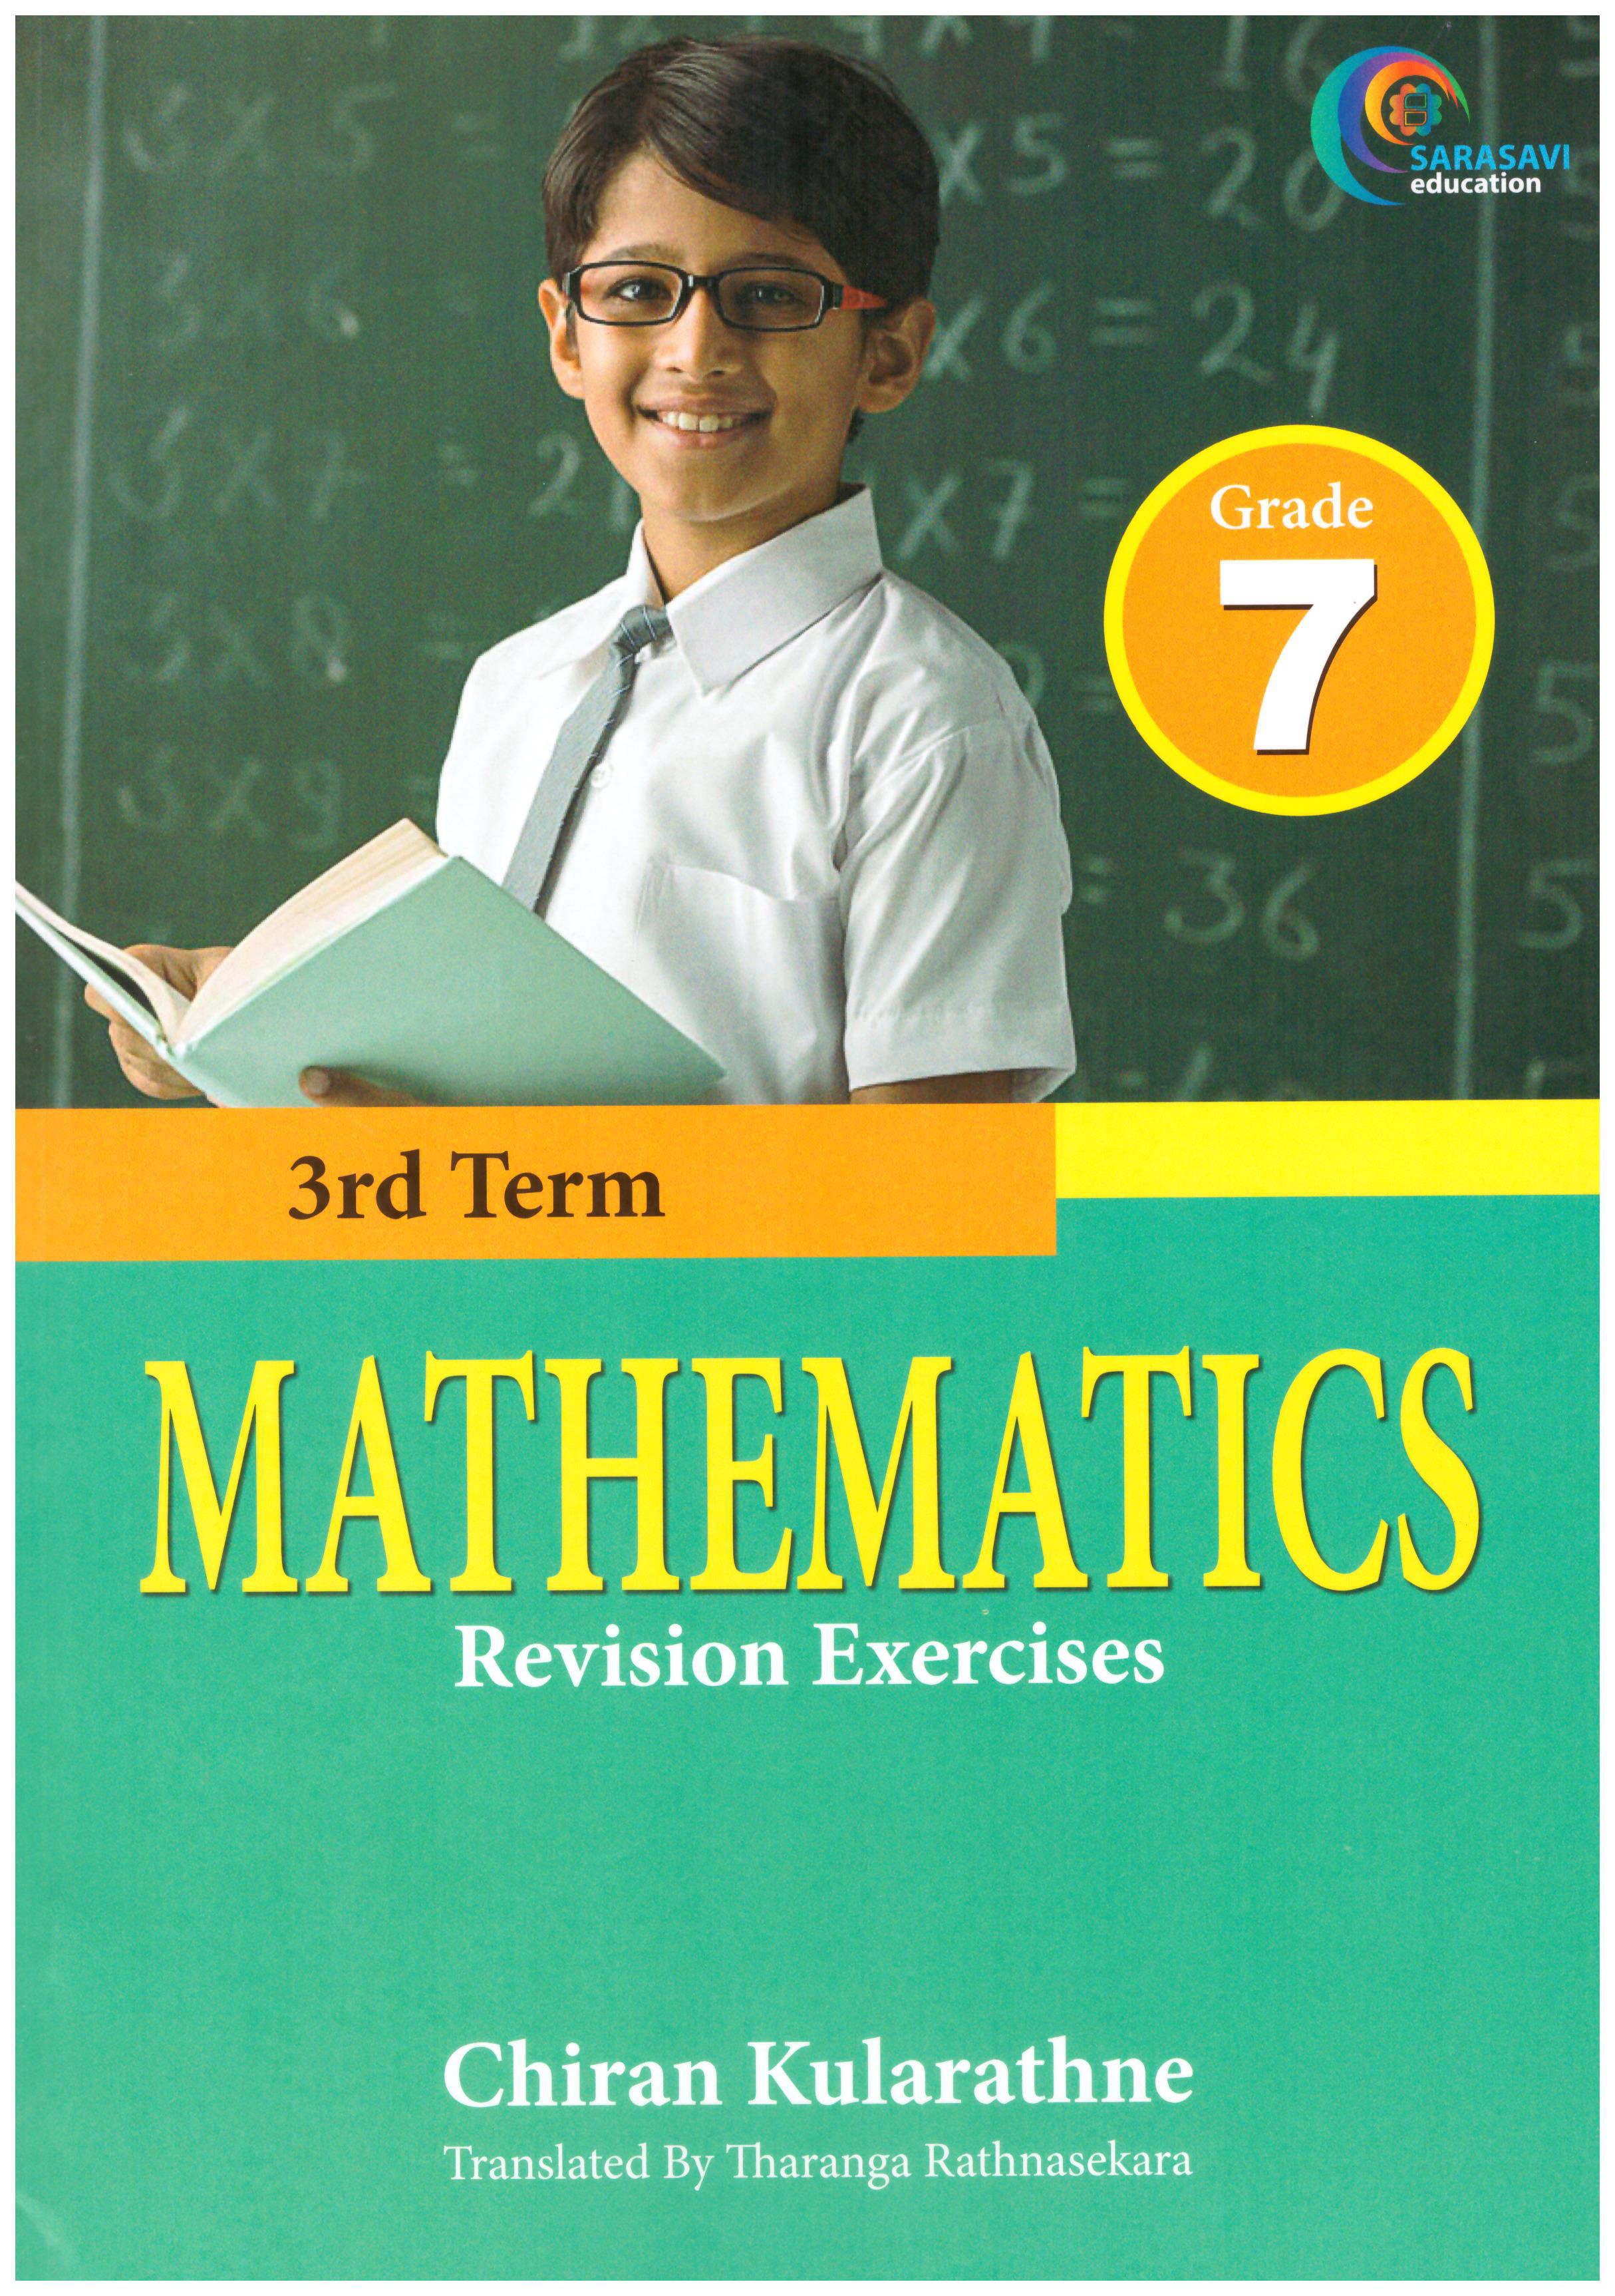 Grade 7 Mathematics Revision Exercises 3rd Term